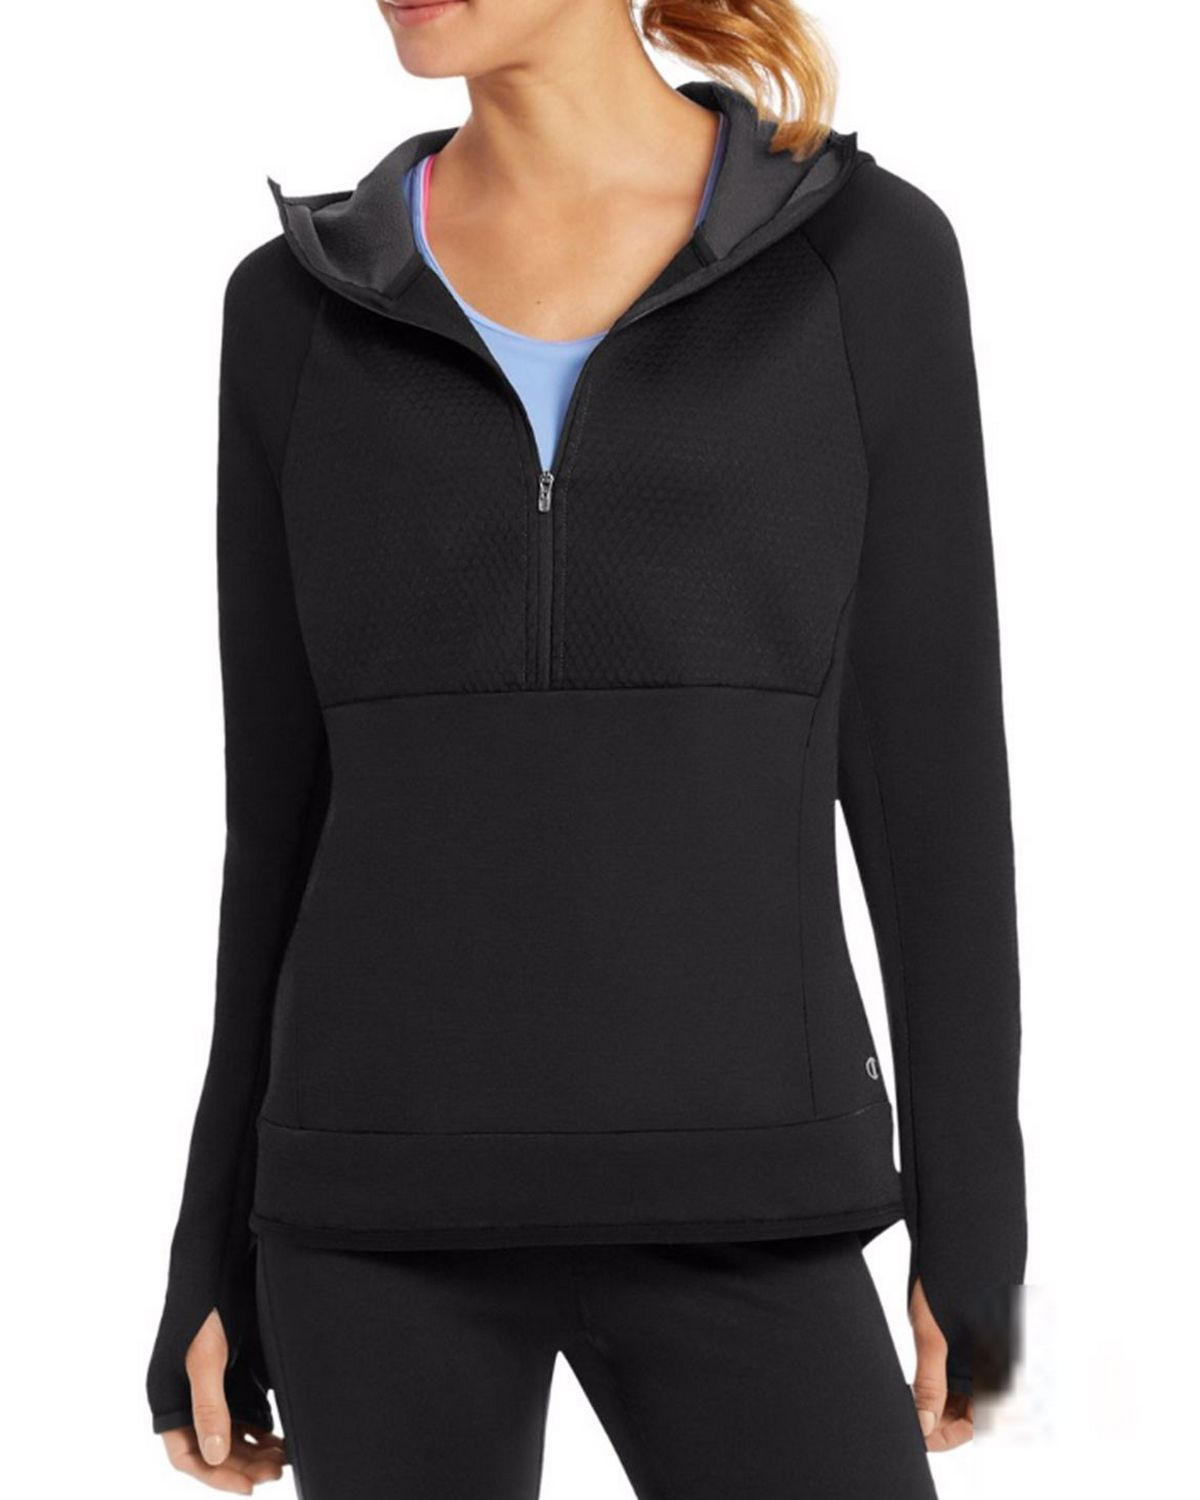 champion women's tech fleece full zip jacket